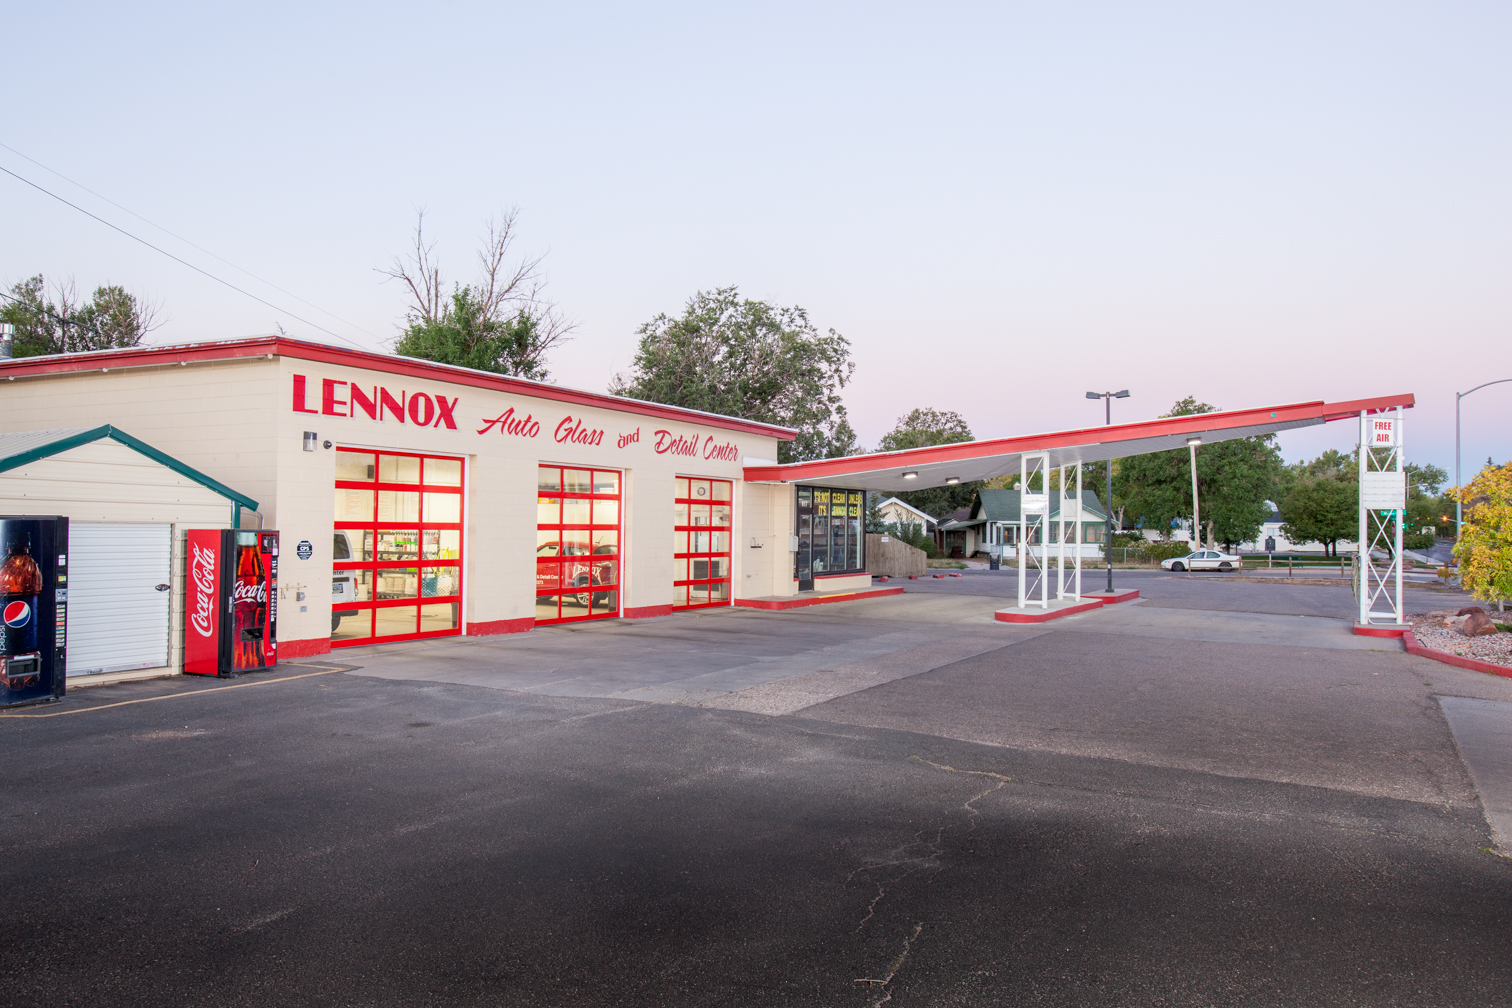 Lennox Auto Glass & Detail Center